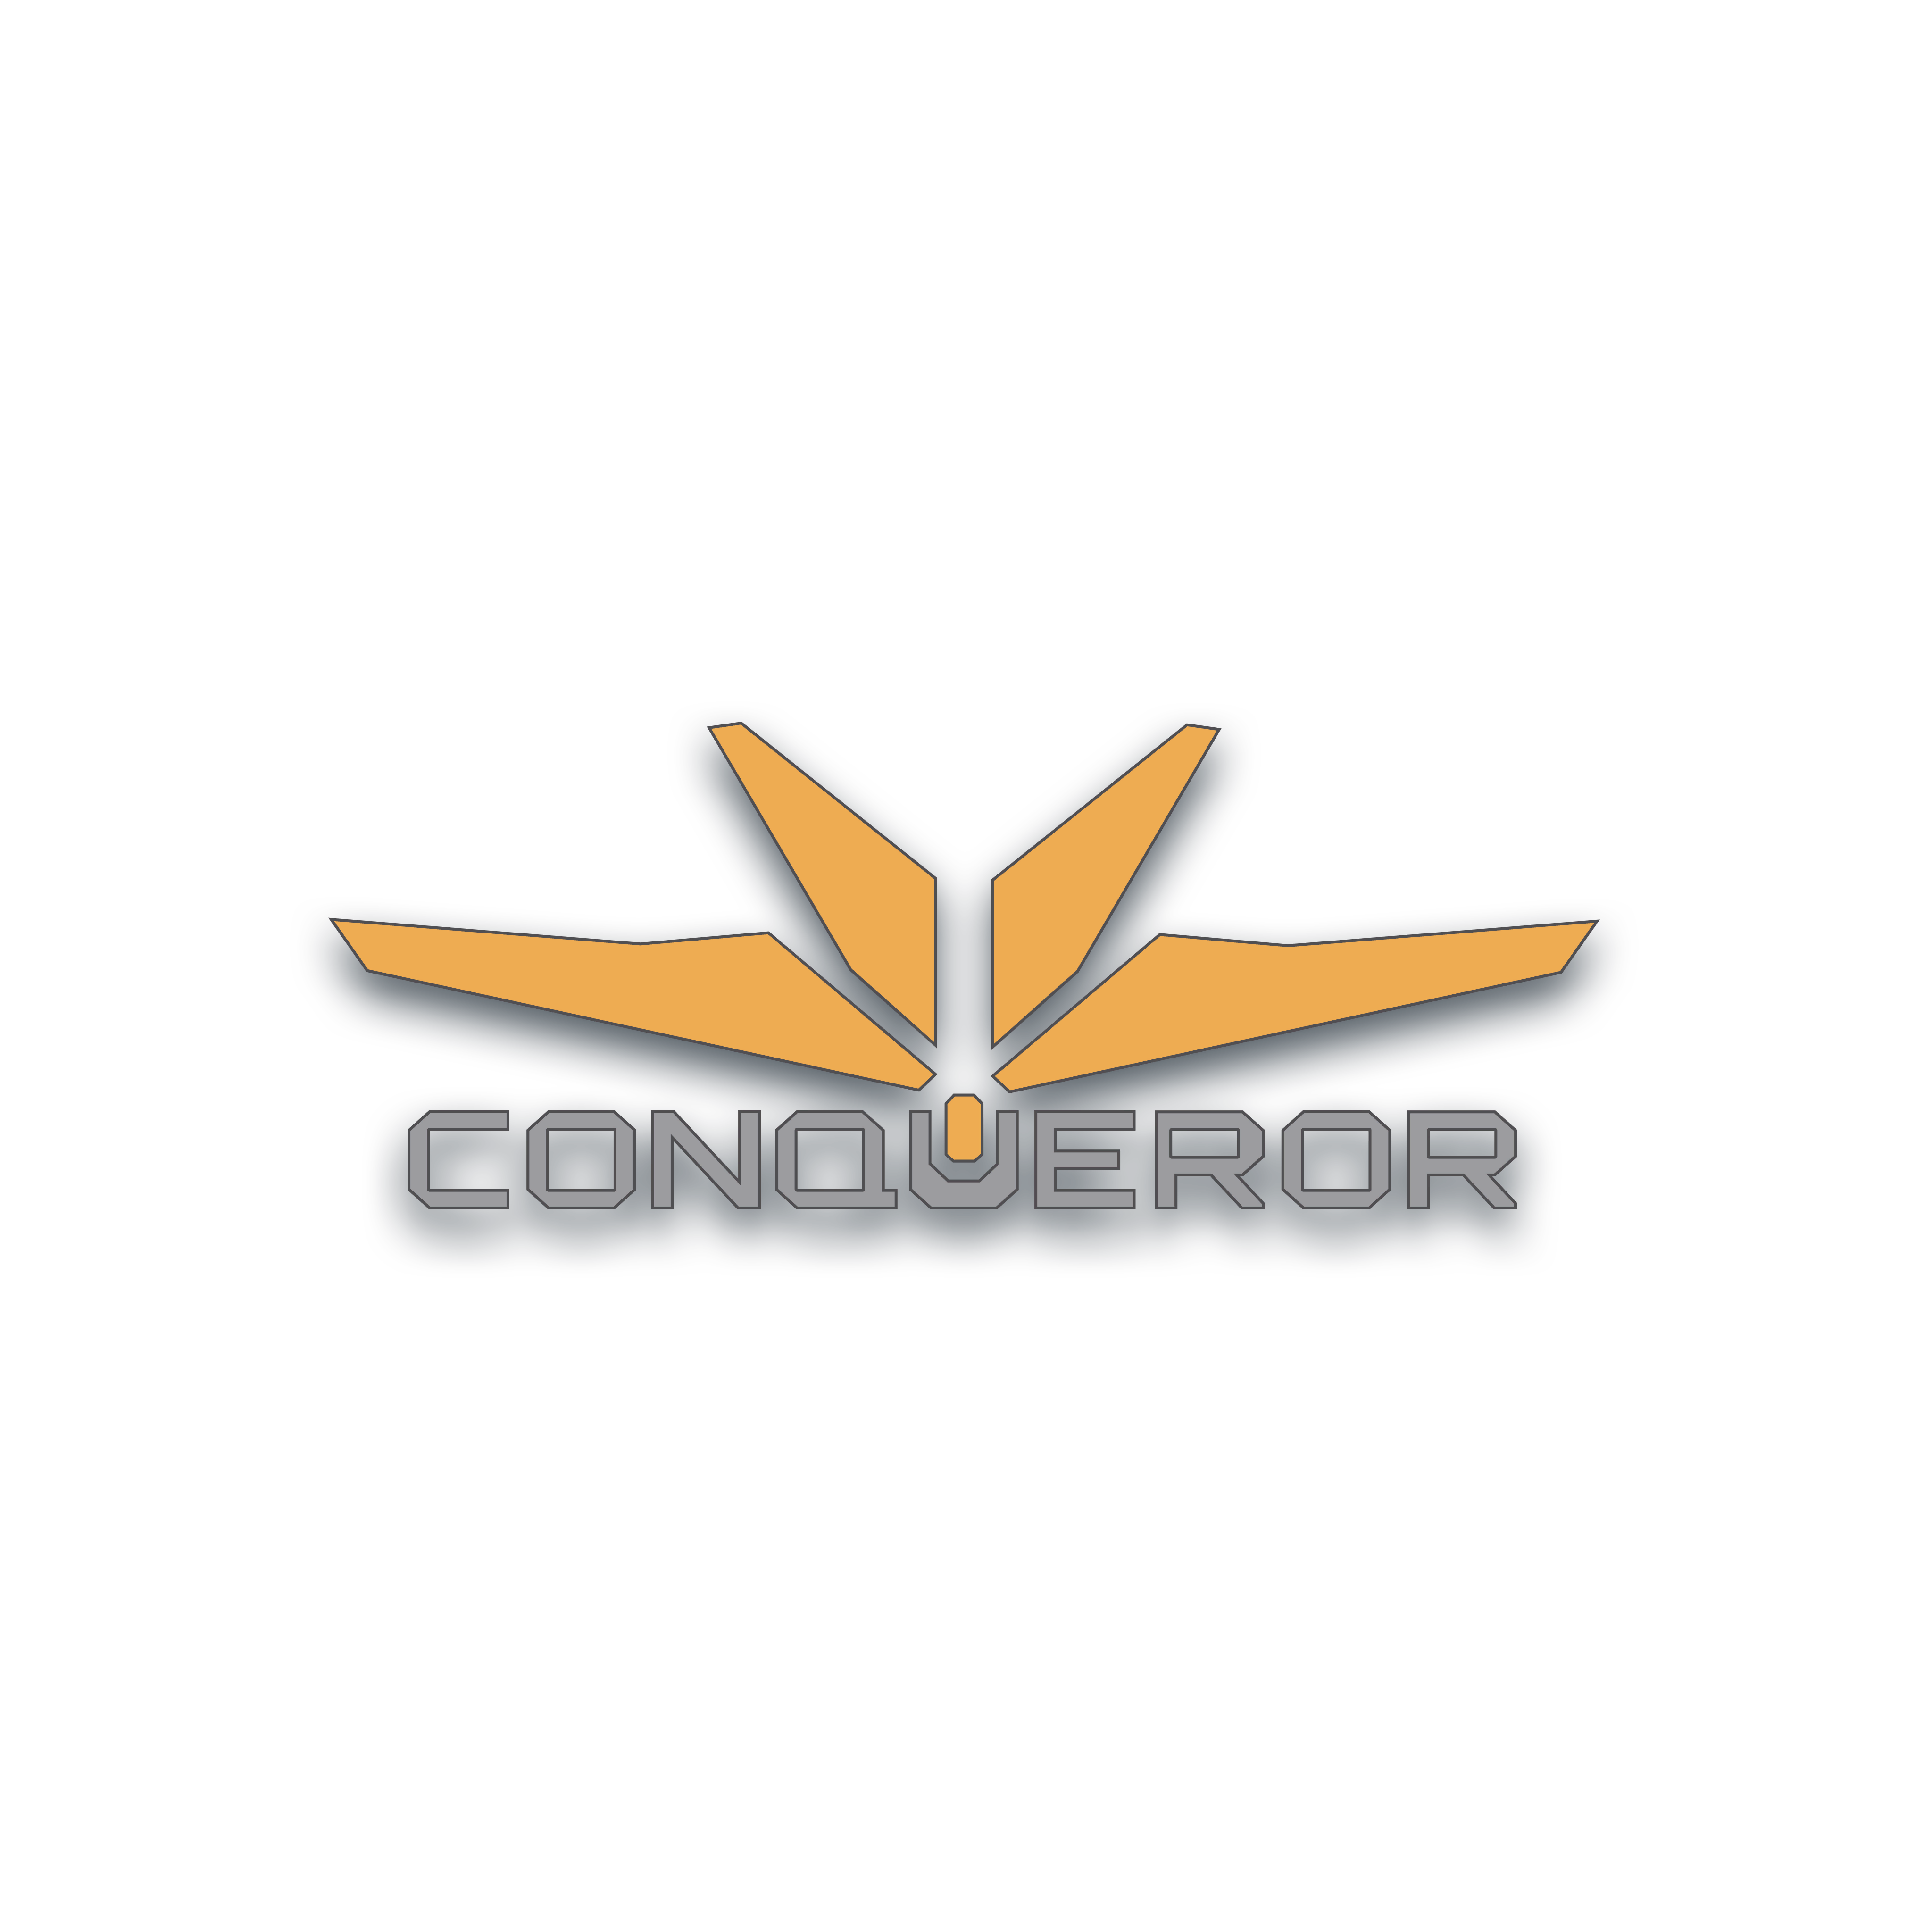 Premium Vector | A logo for conquistadors that says conquistadors.